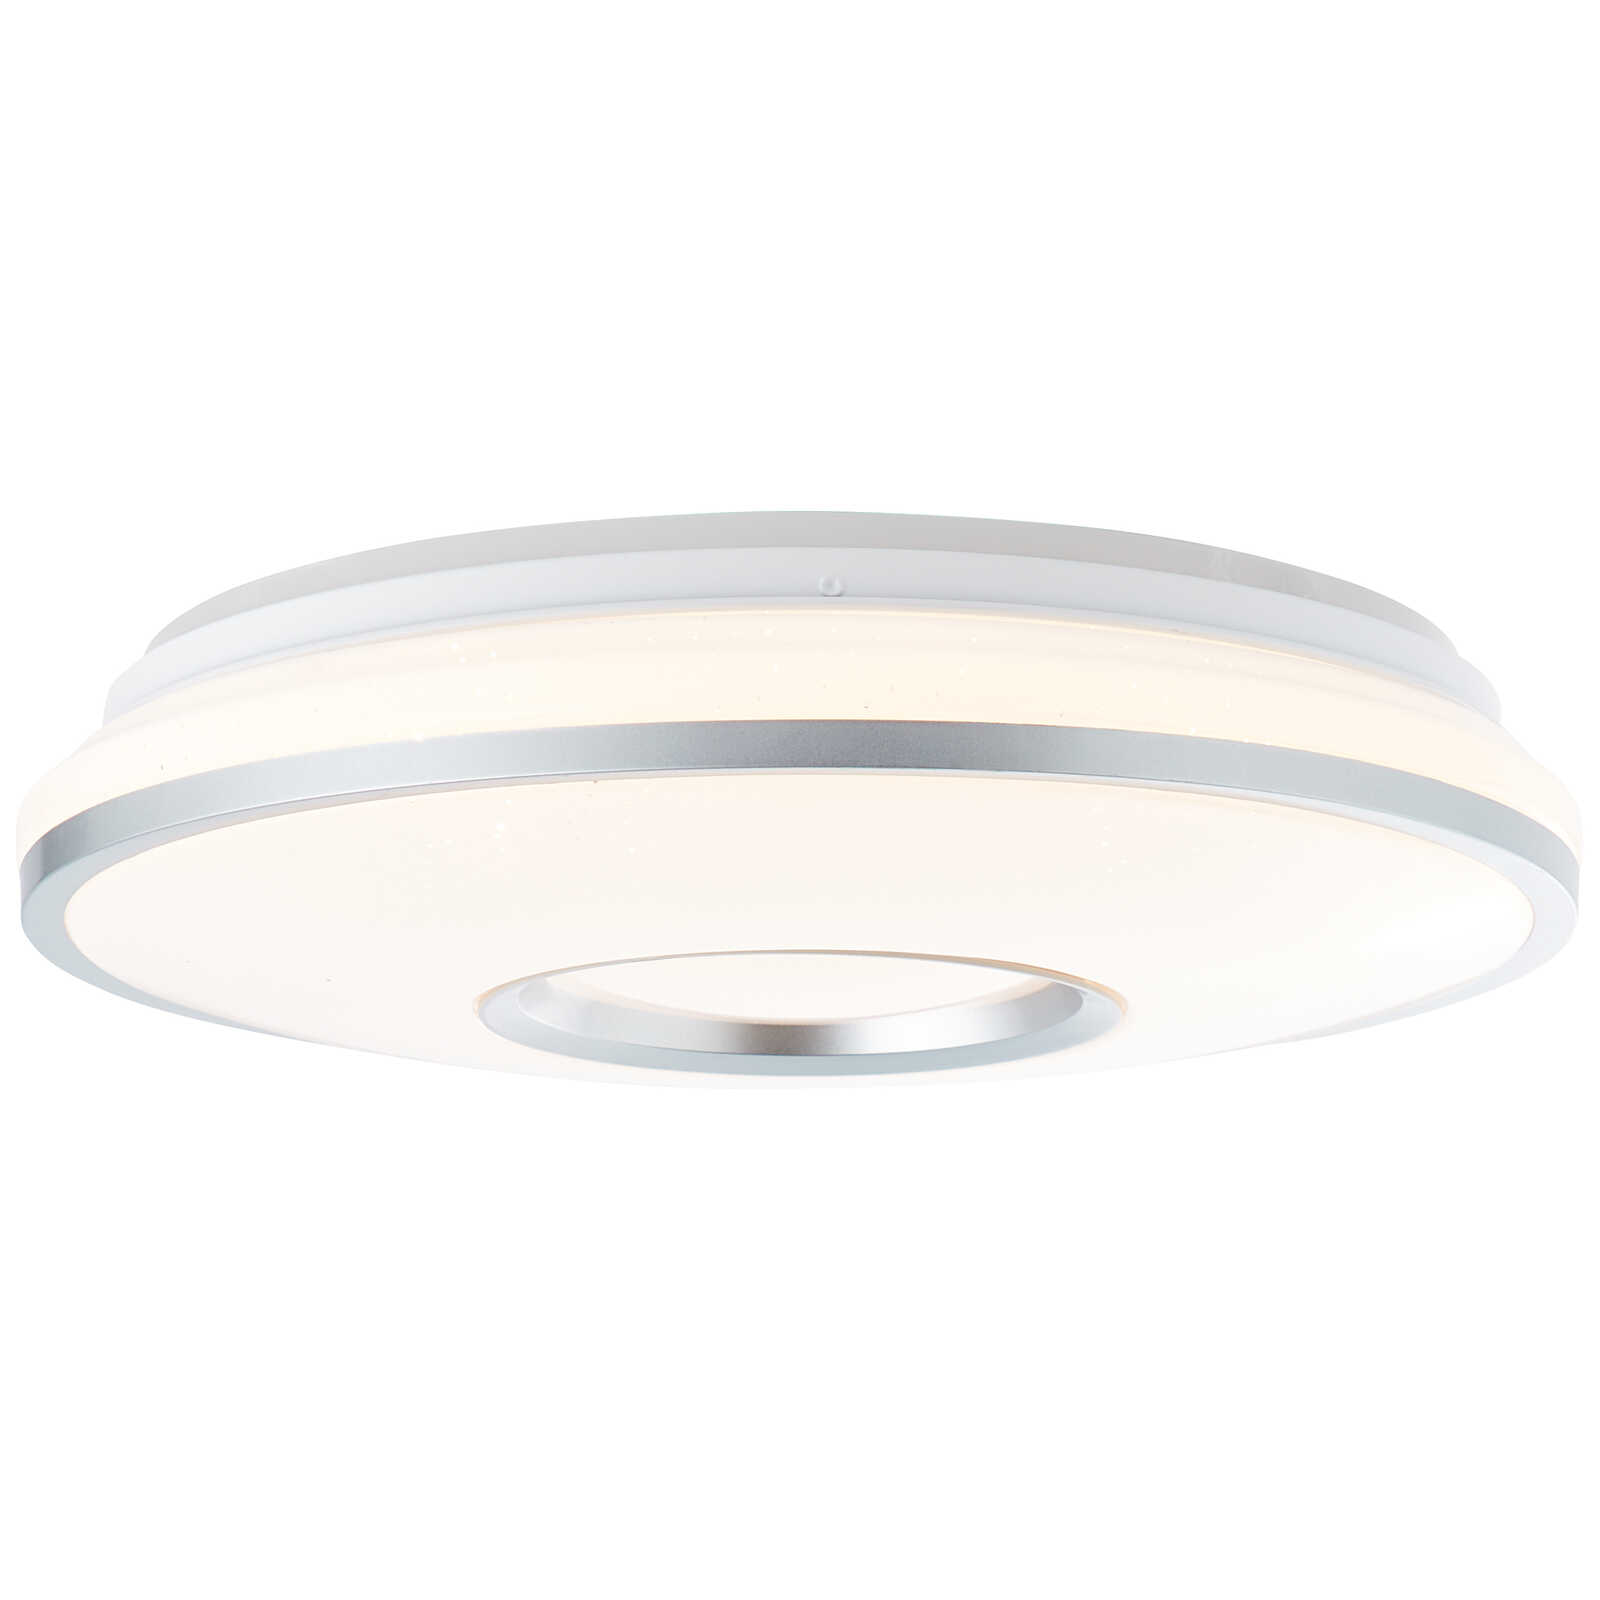             Plastic ceiling light - Tessa 1 - Metallic
        